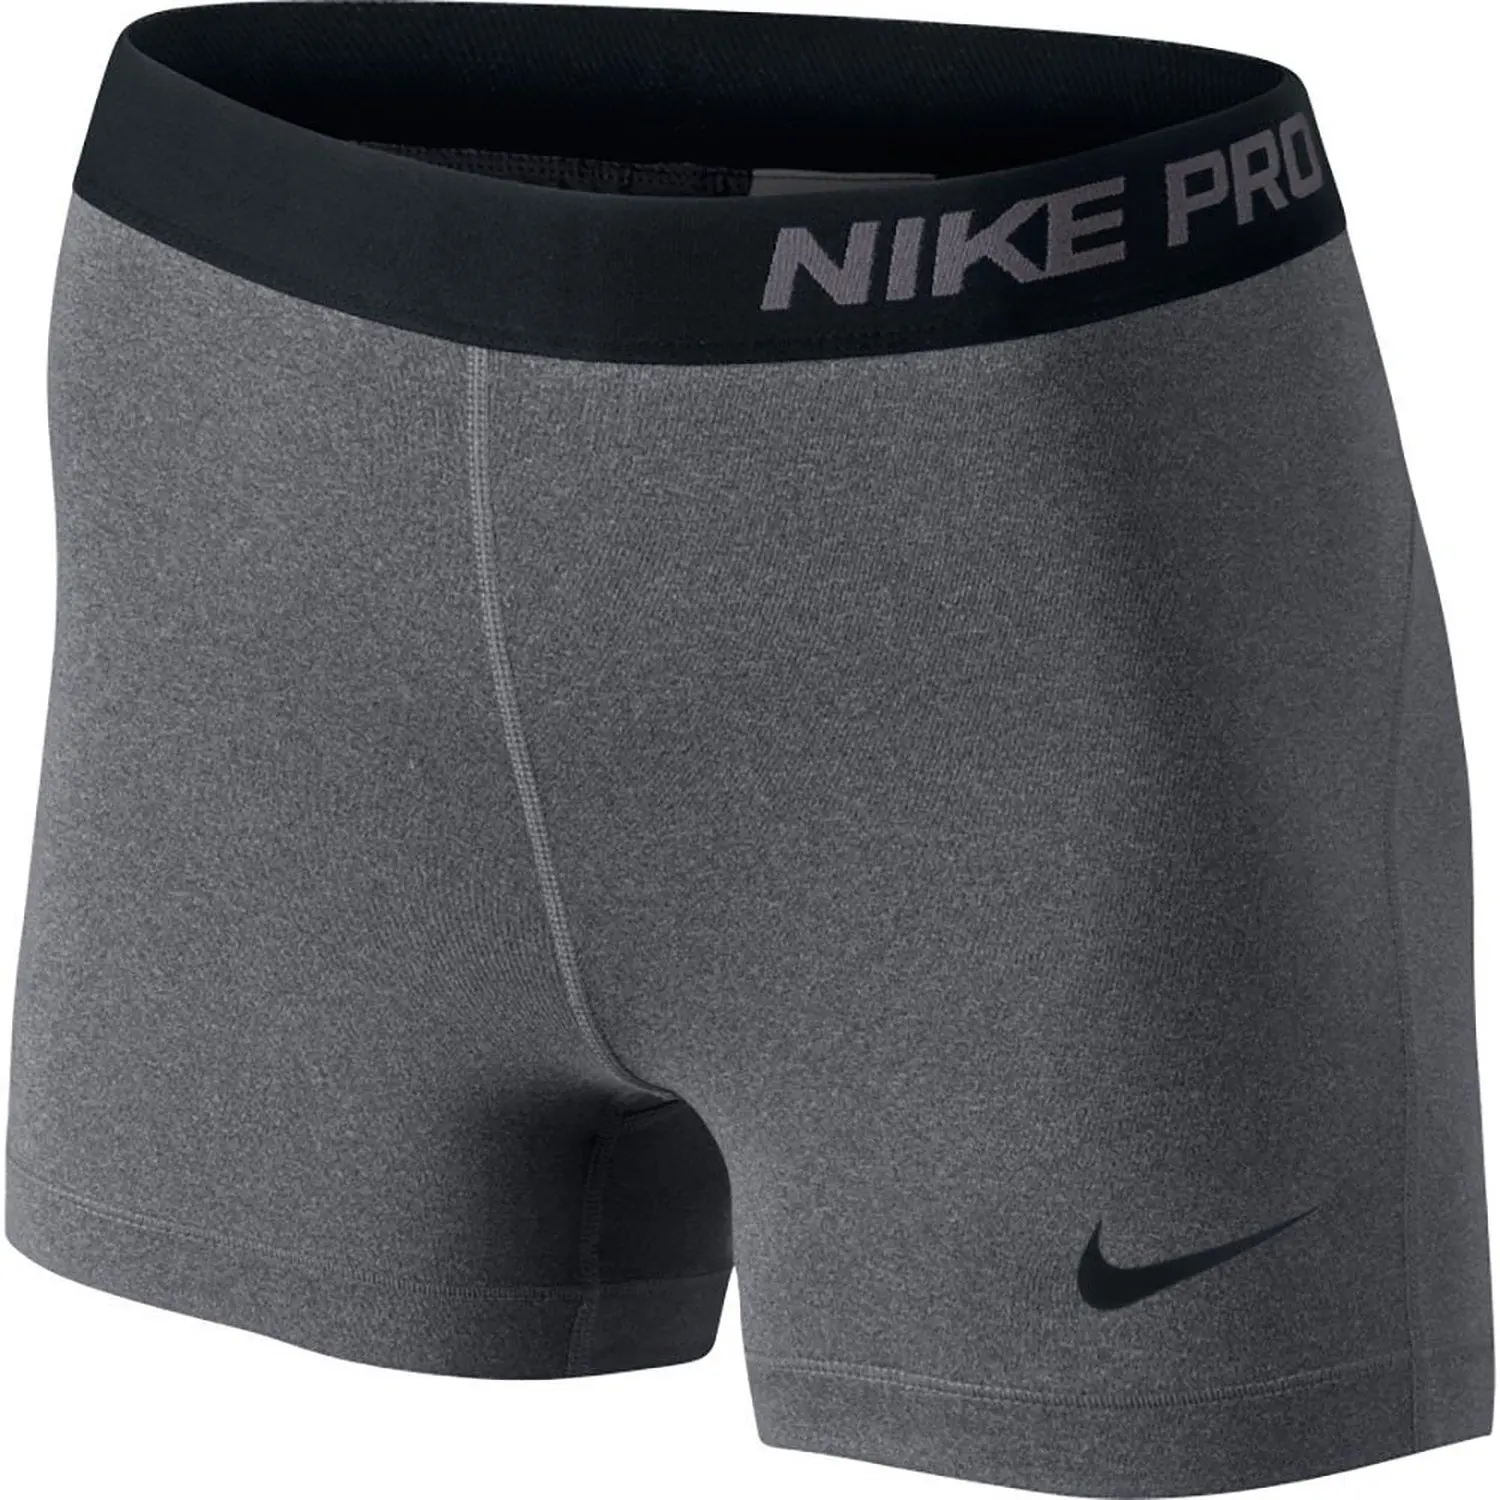 Cheap Cheap Nike Pro Spandex Shorts, find Cheap Nike Pro Spandex Shorts